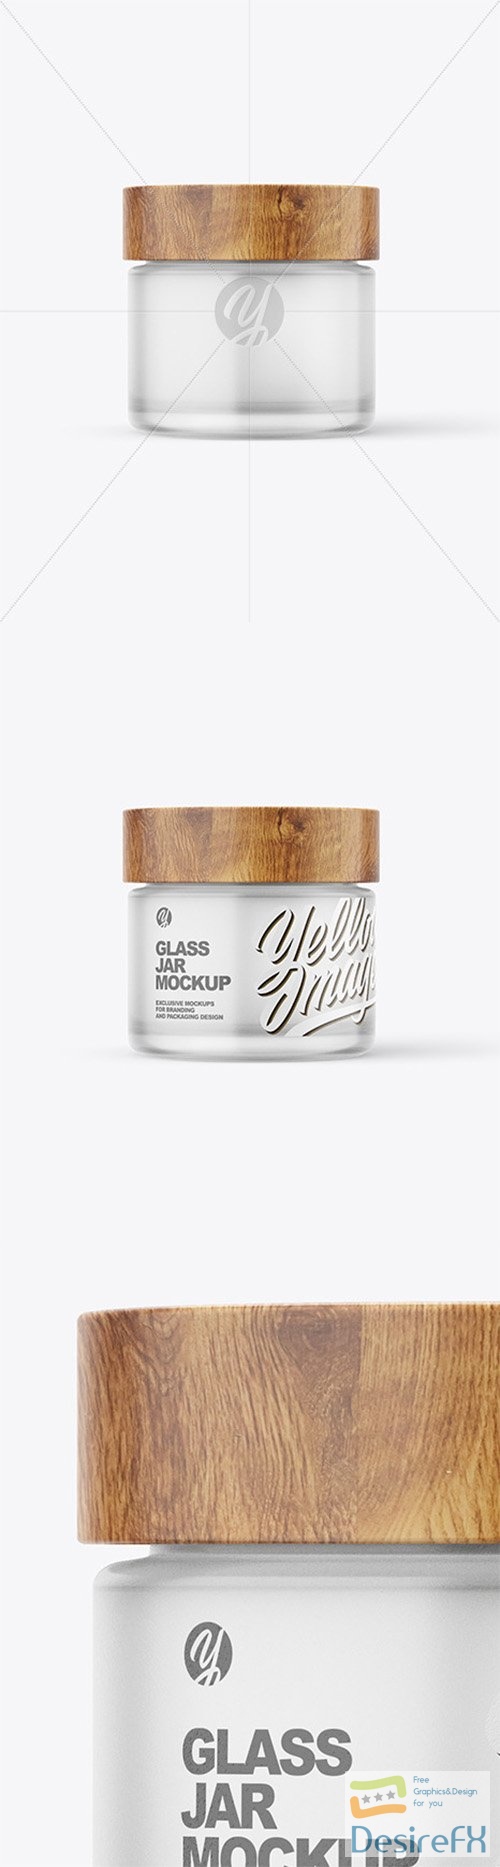 60ml Frosted Glass Jar W/ Wooden Lid Mockup 80171 TIF